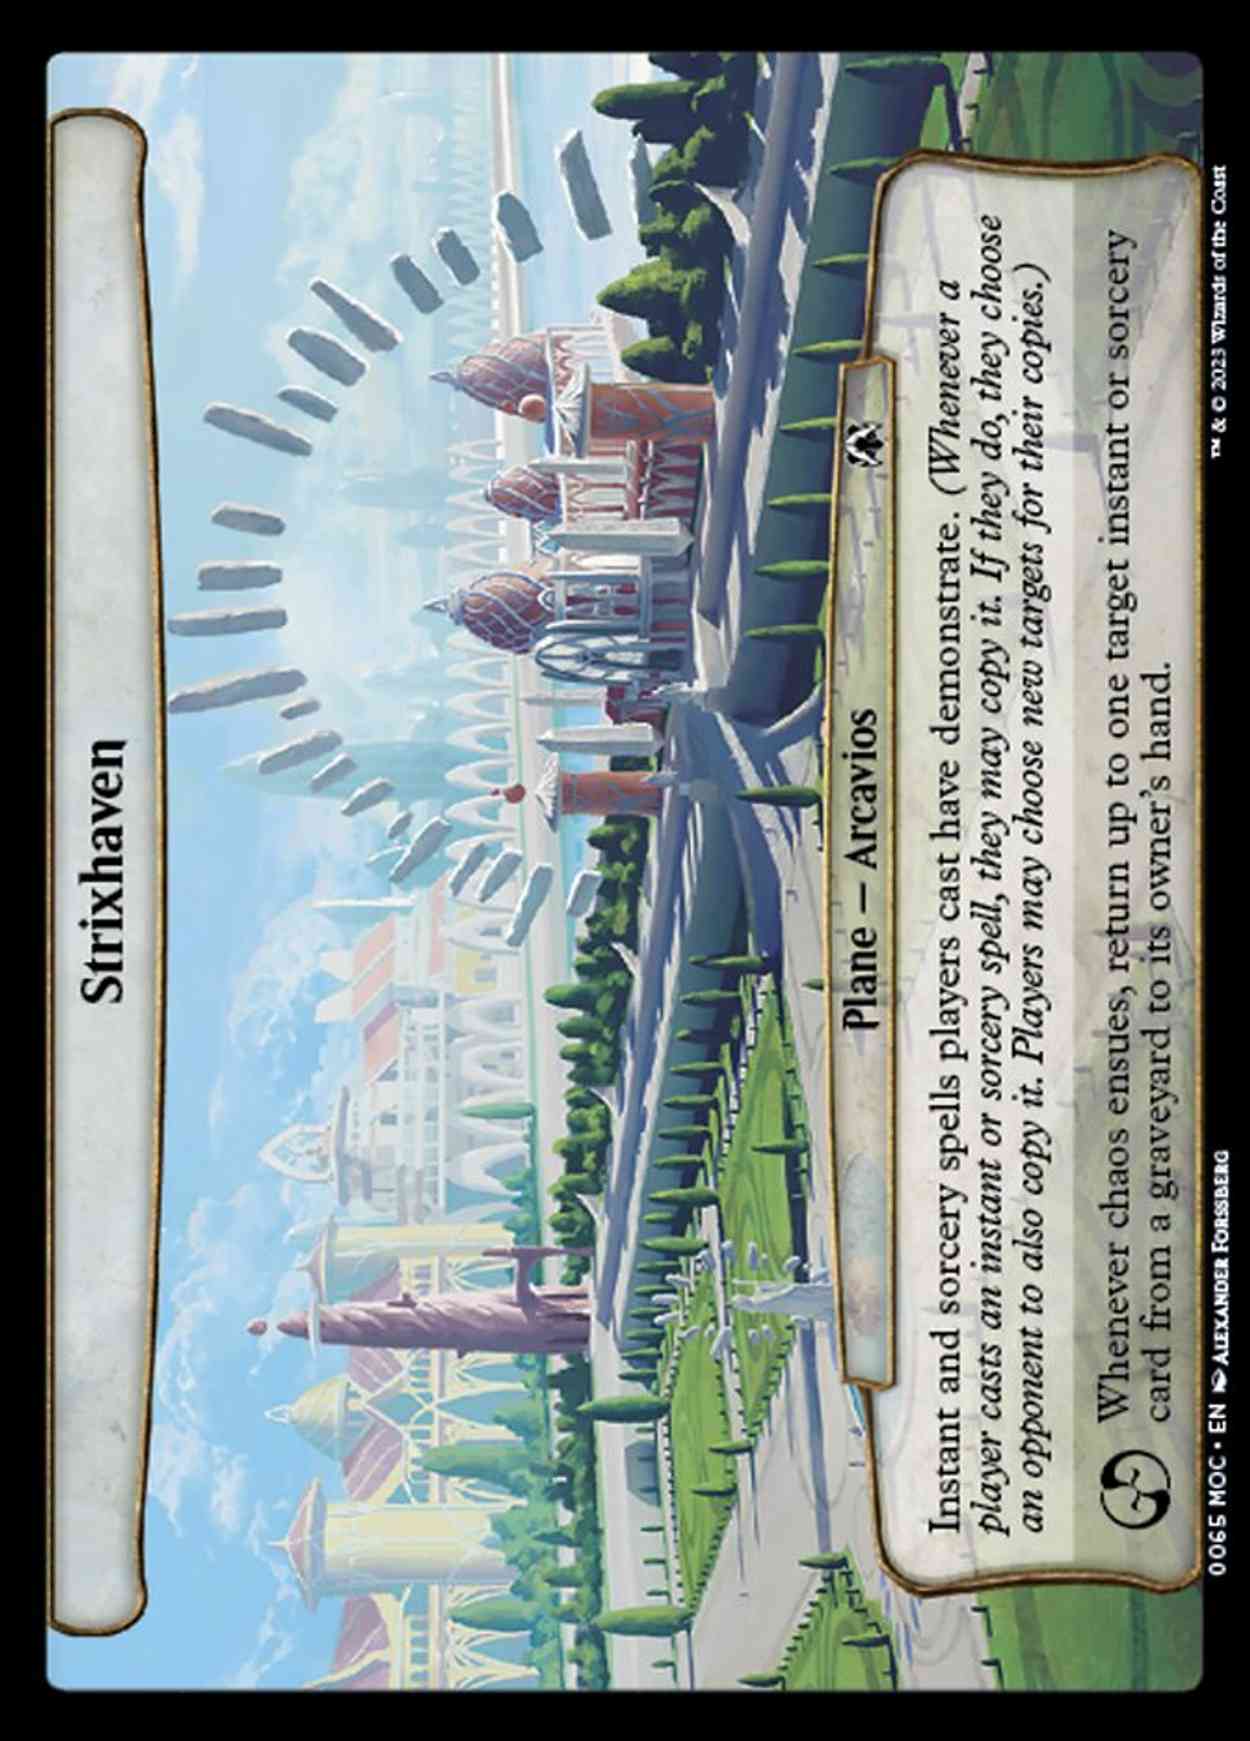 Strixhaven magic card front